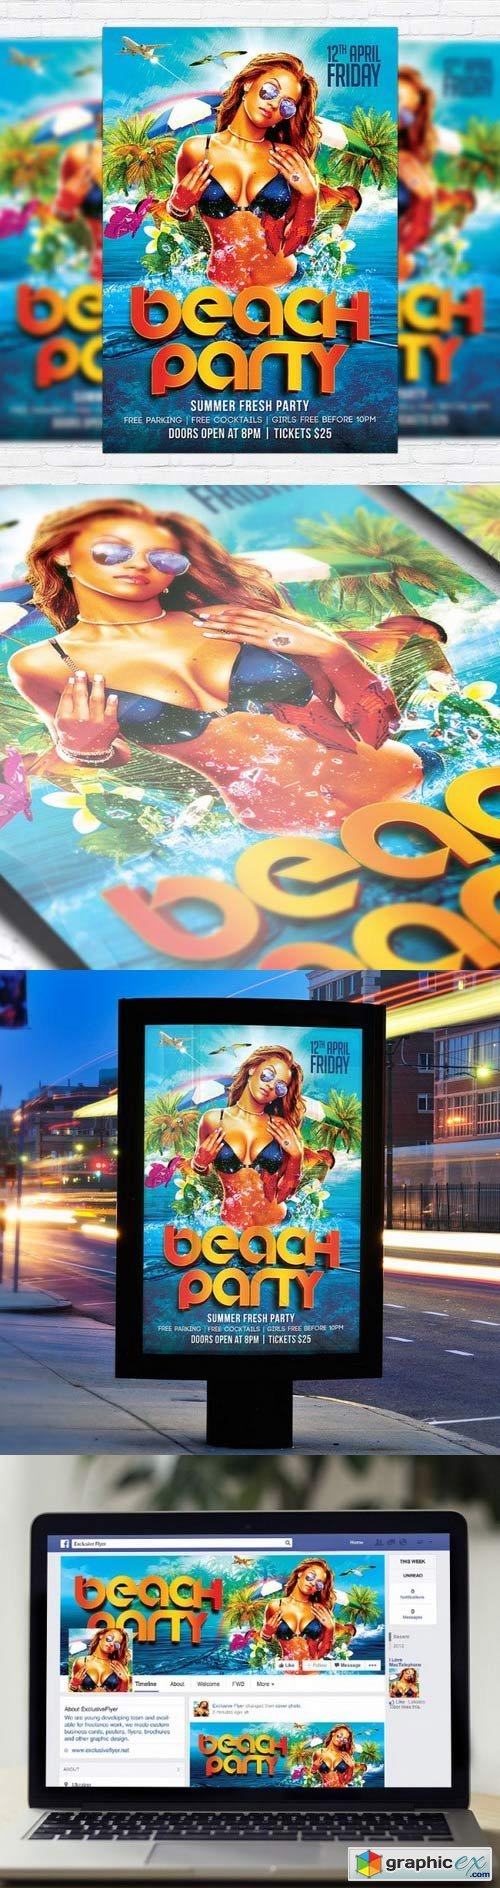 Beach Party Flyer PSD Template + Facebook Cover